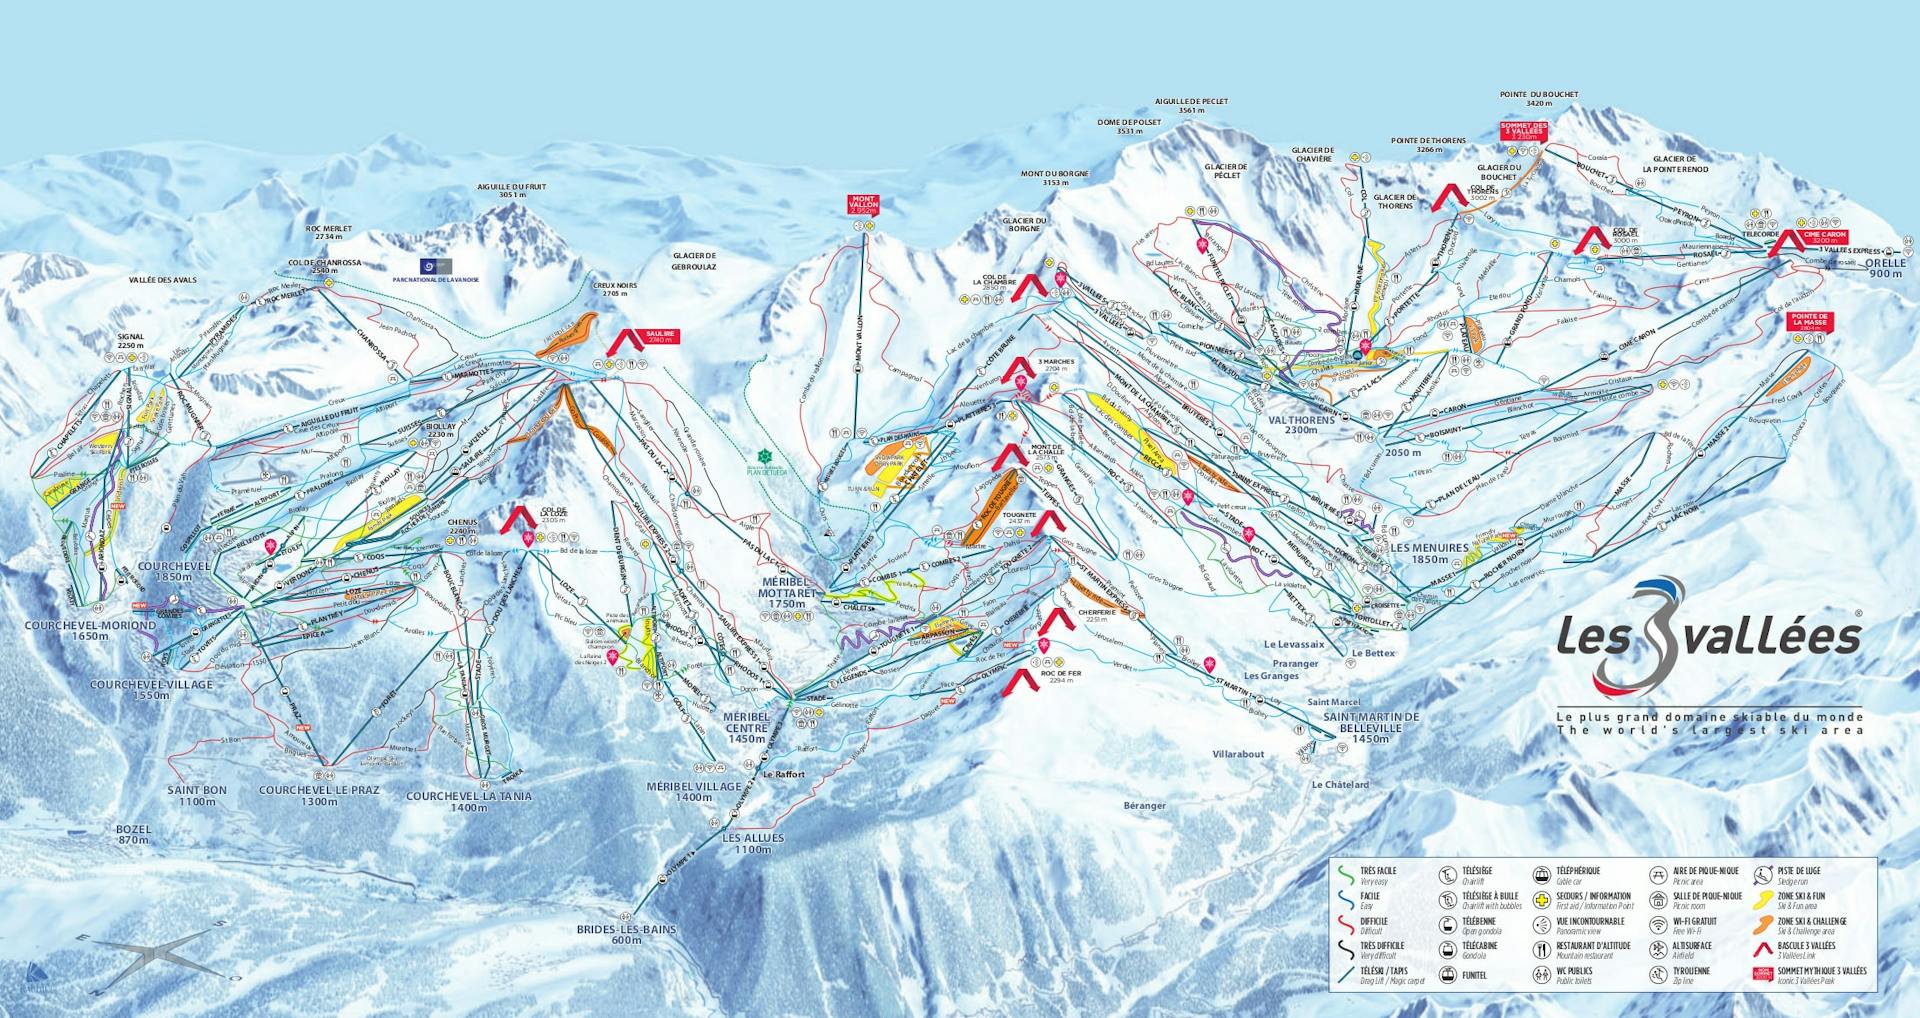 Brides-les-Bains ski map